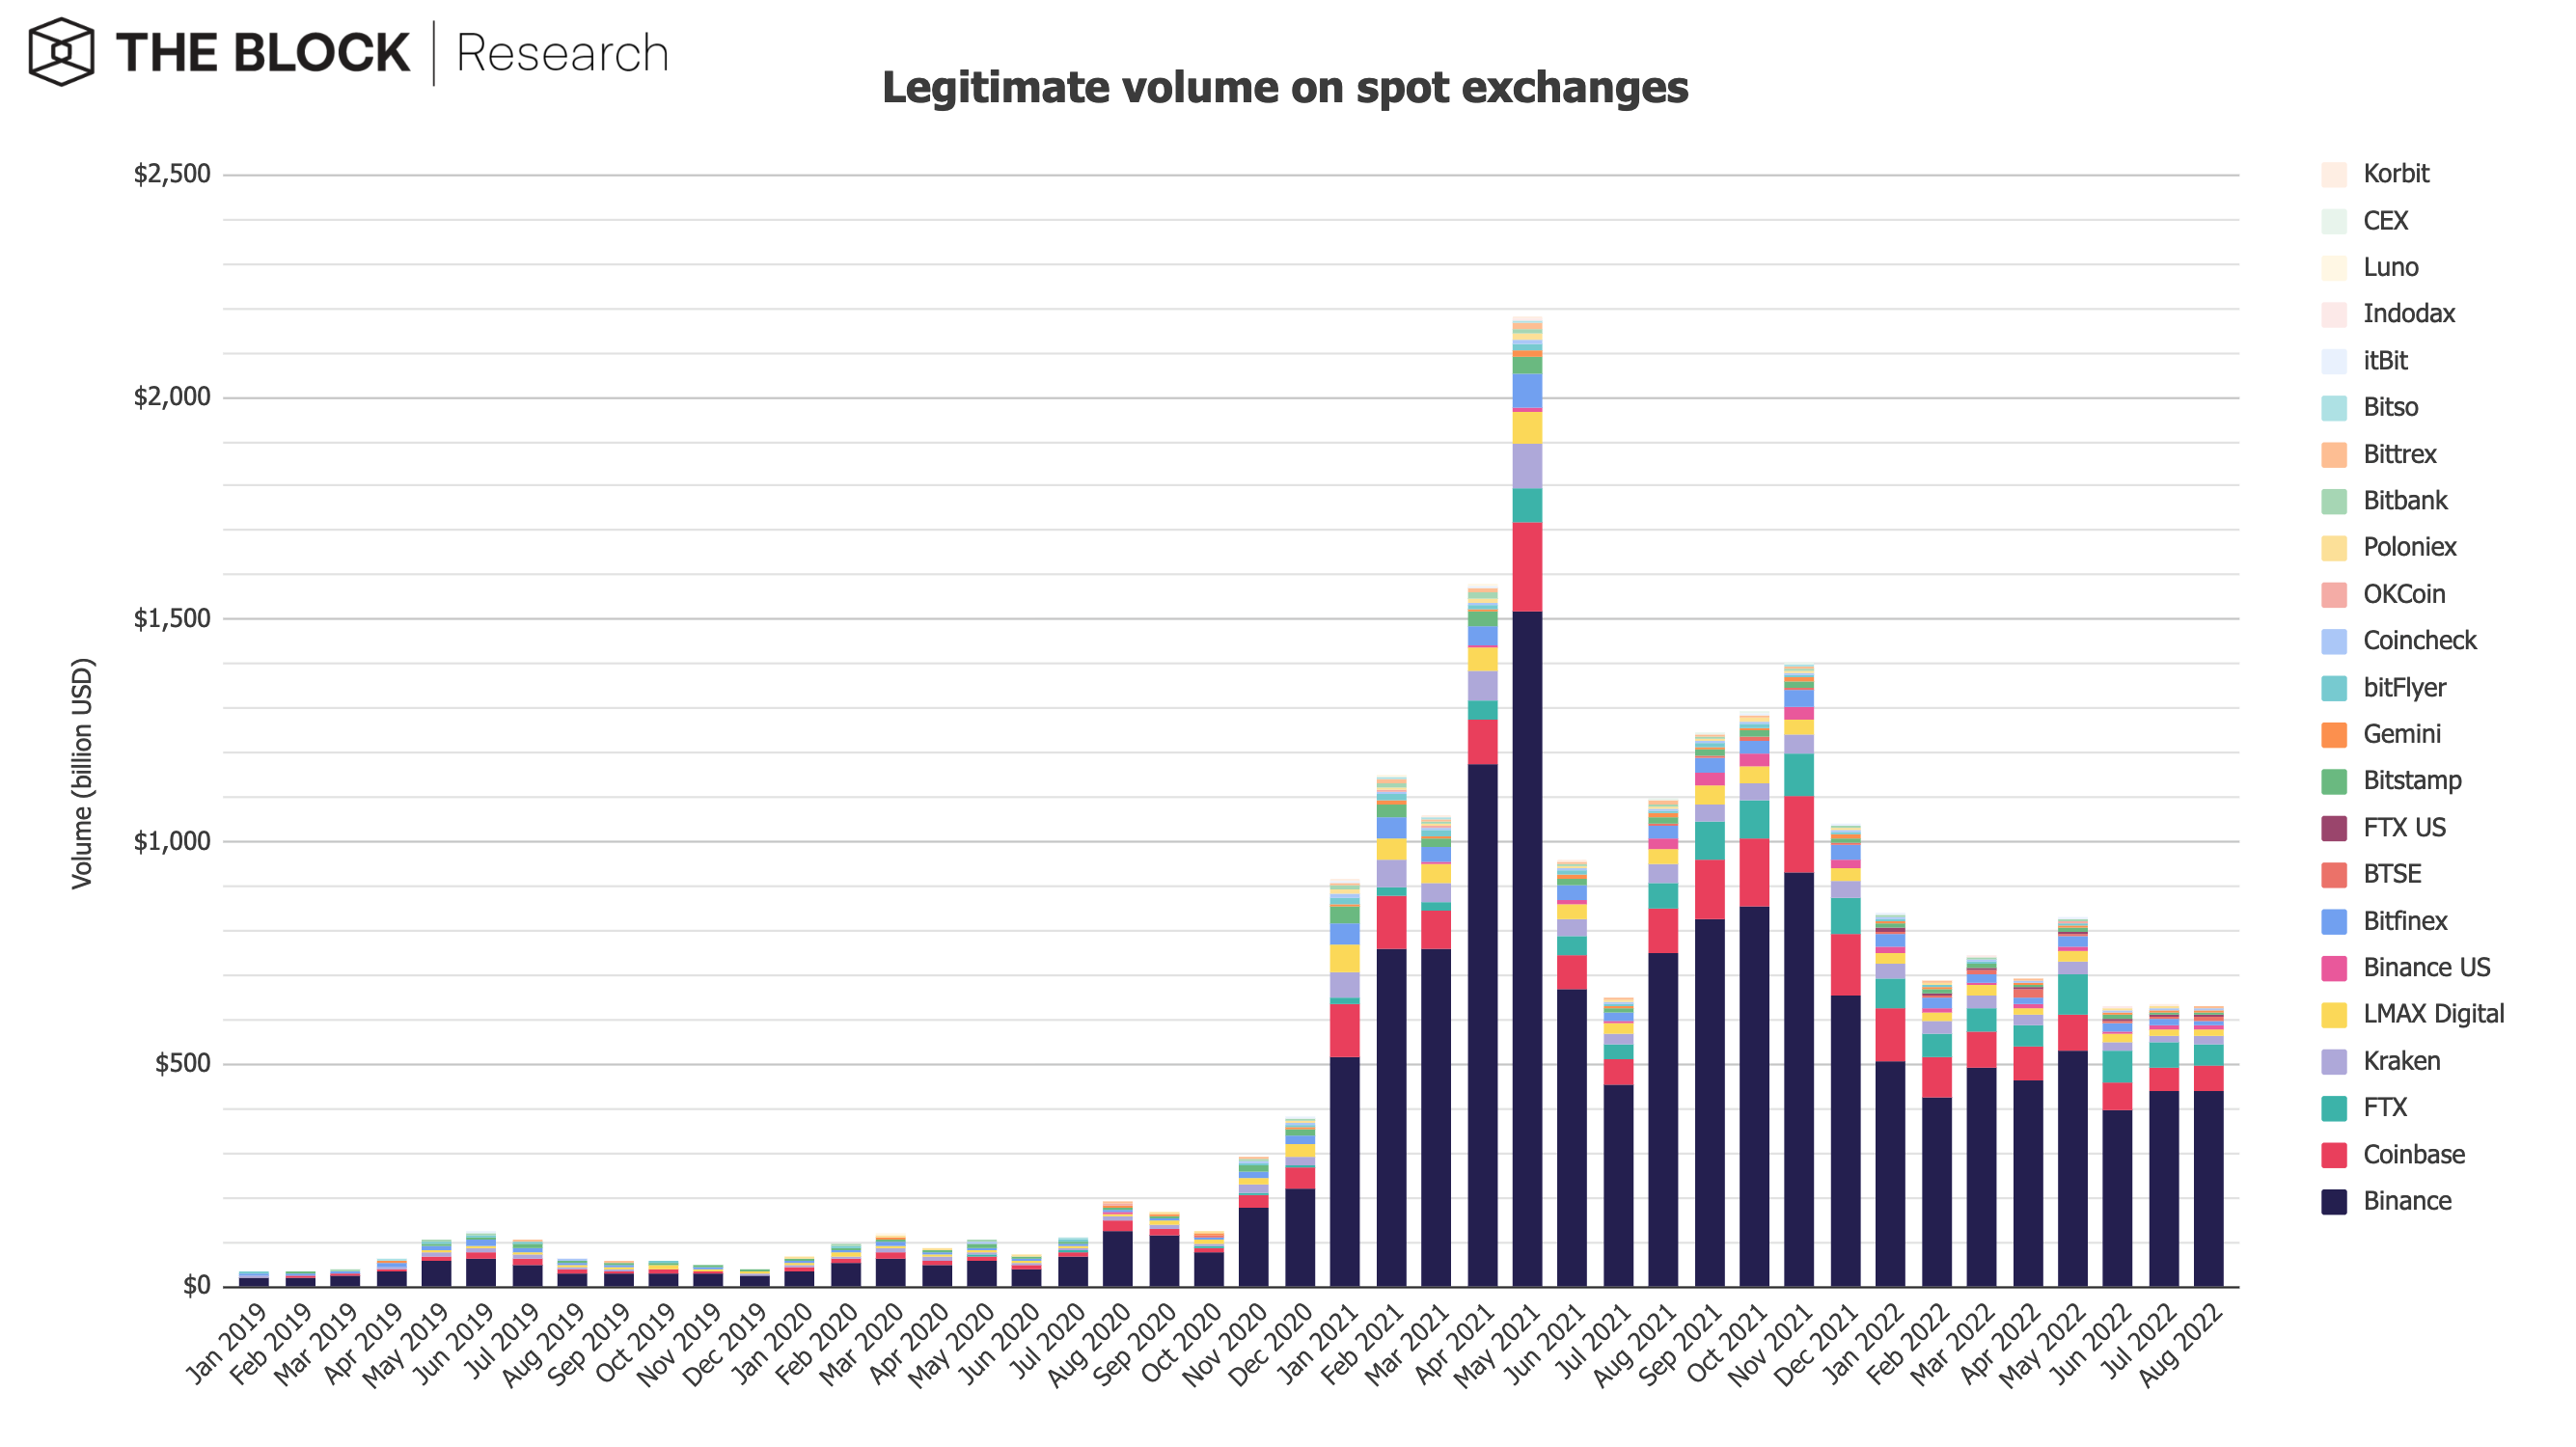 12. Legitimate volume on spot exchanges 1 1 - حجم صرافیهای متمرکز و غیرمتمرکز در ماه آگوست کاهش یافته است